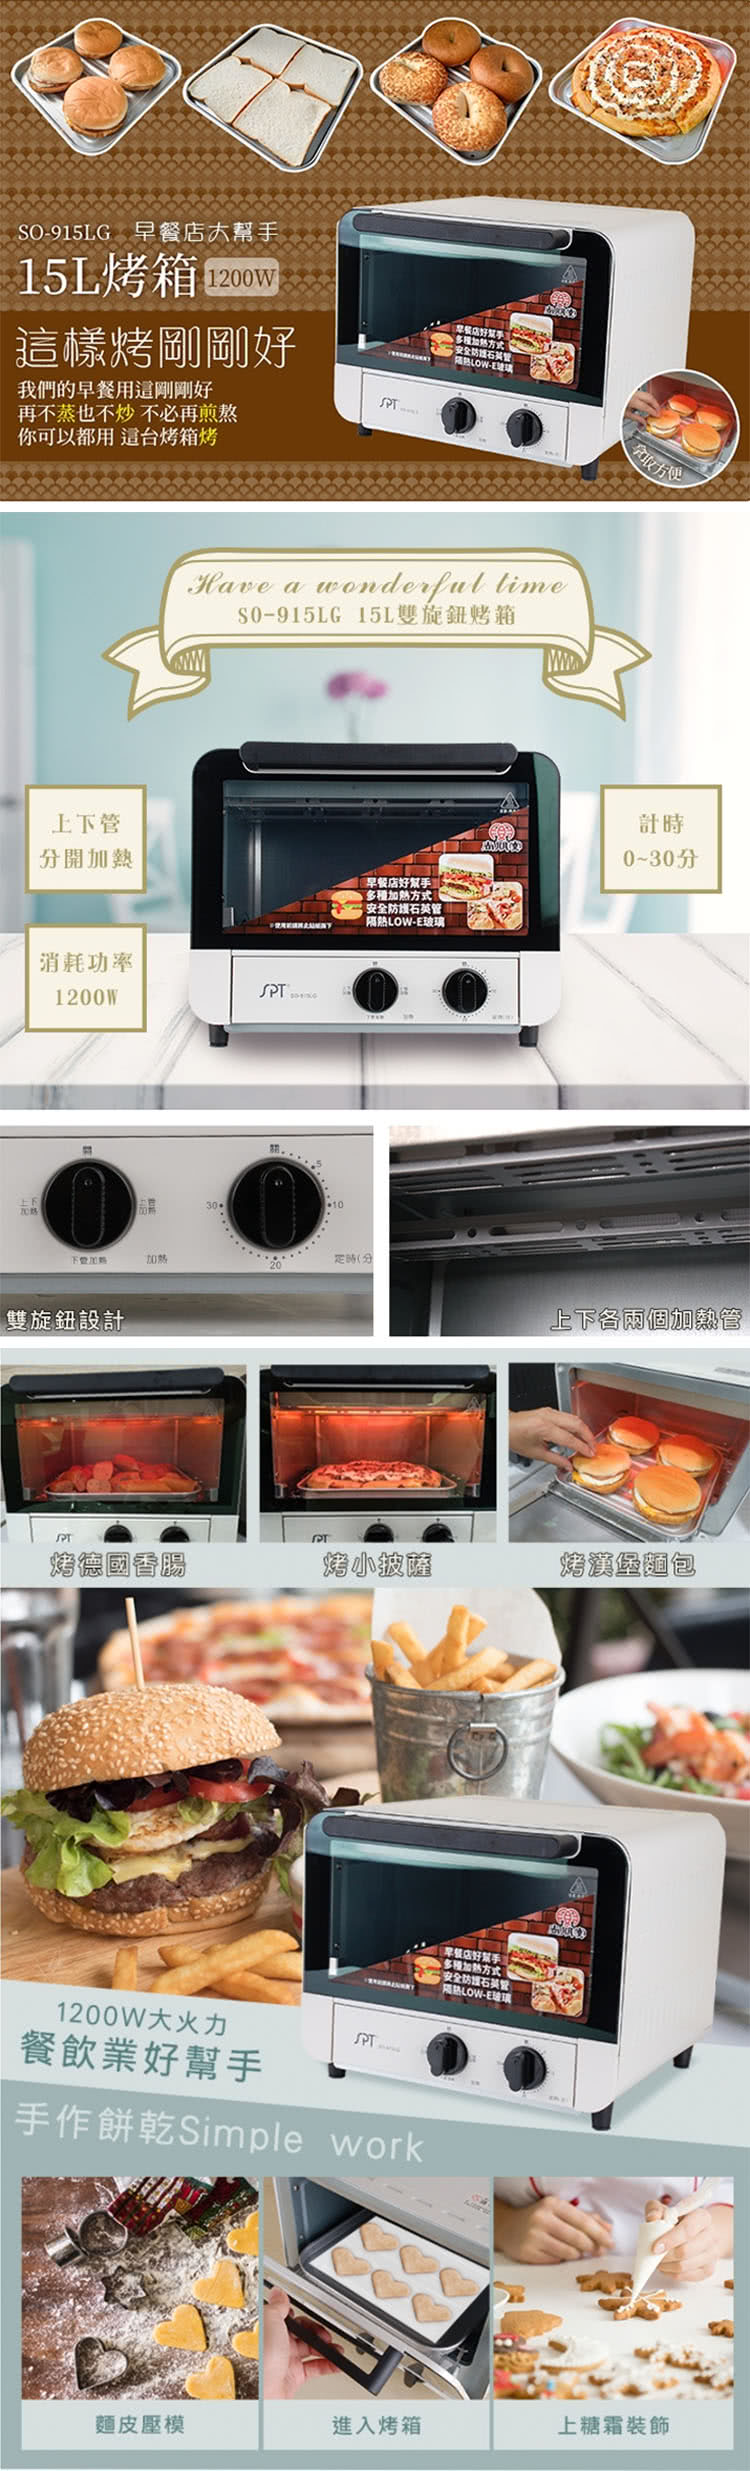 SPT 尚朋堂 15L雙旋鈕控管烤箱(SO-915LG)優惠